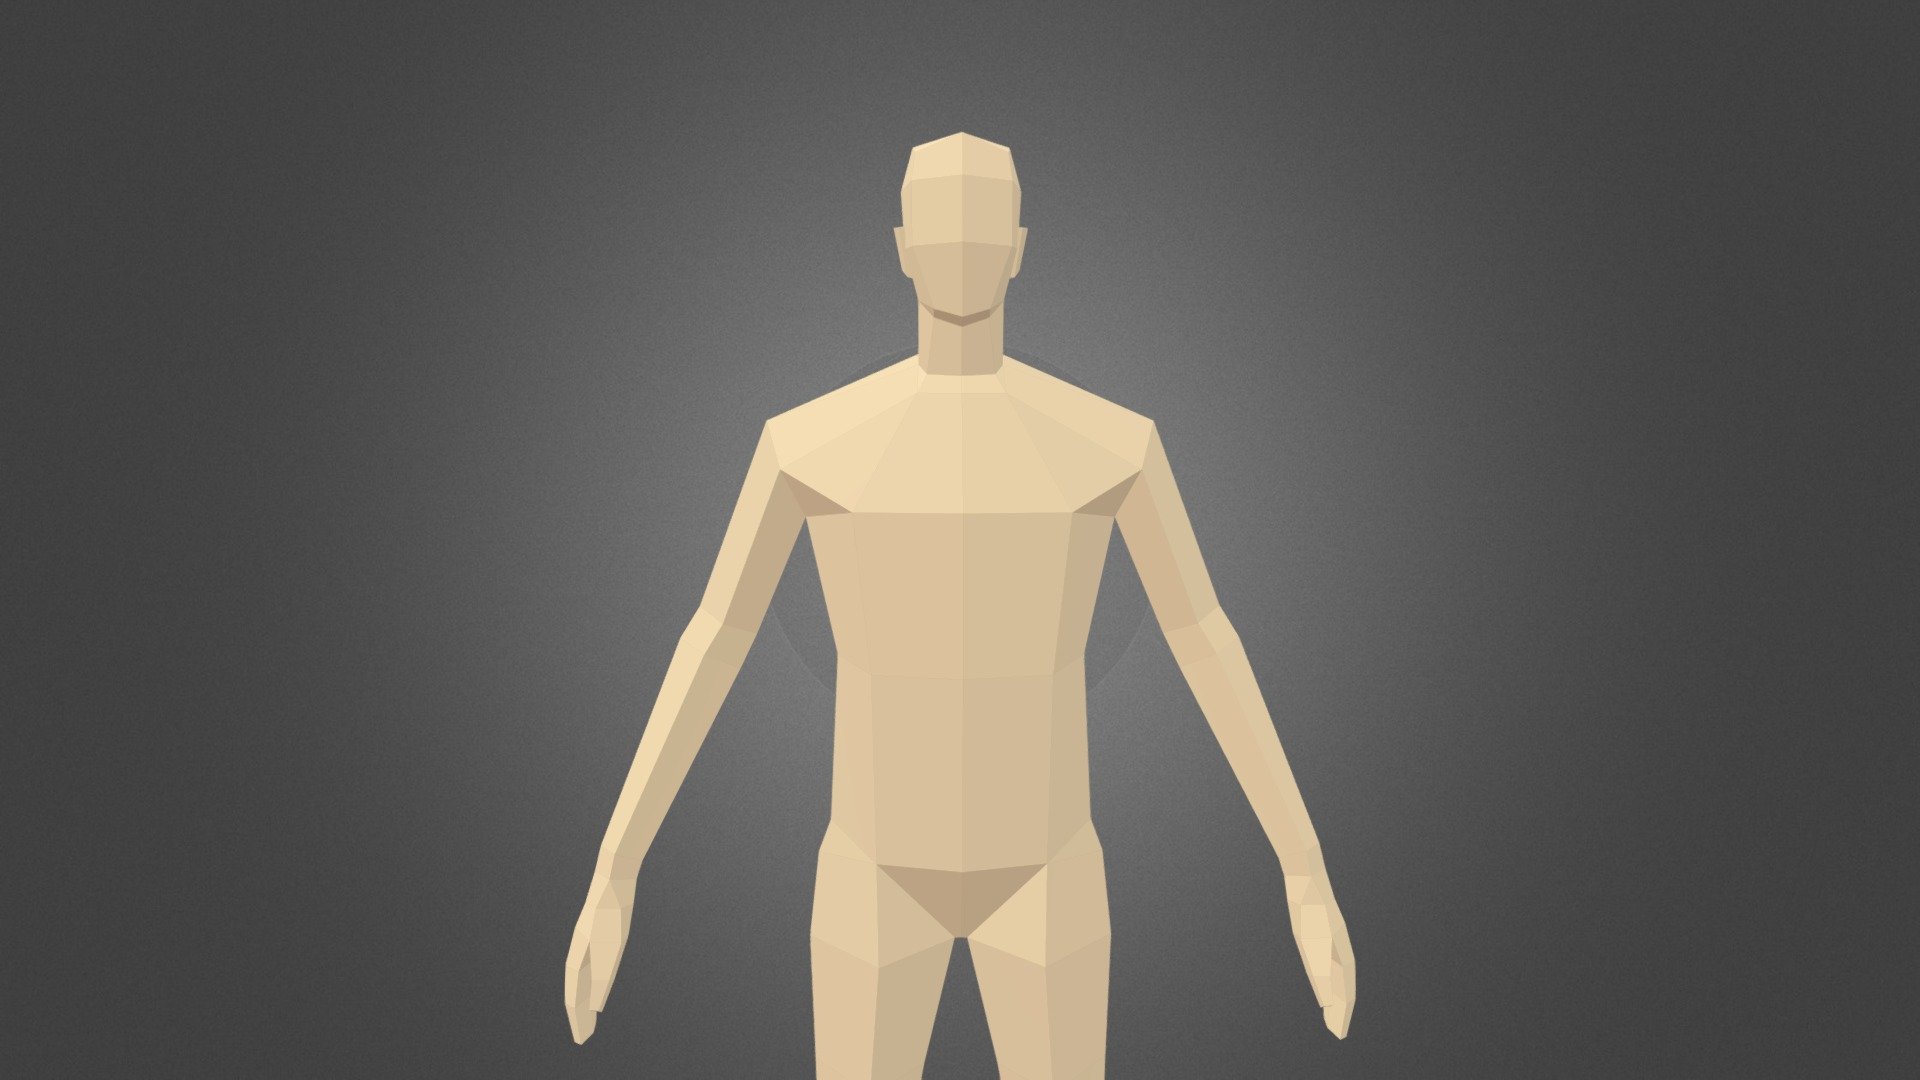 3d human illustration free download